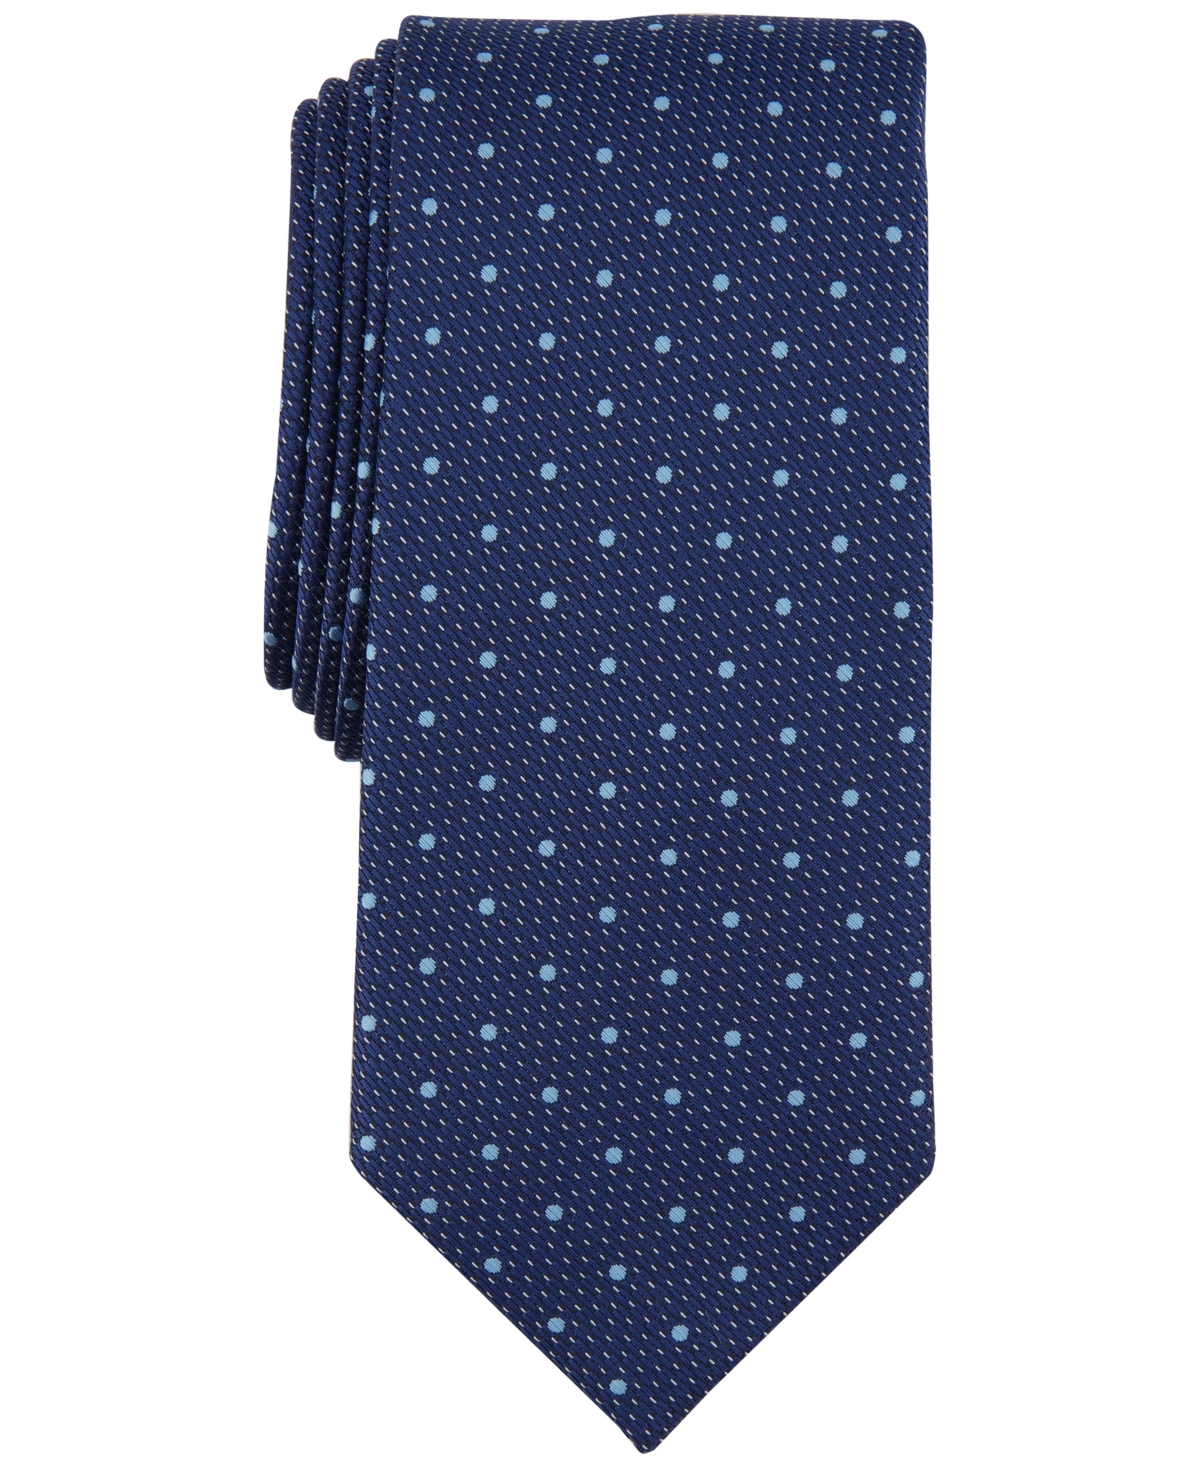 Men's Marshall Dot Tie, Created for Macy's - Navy